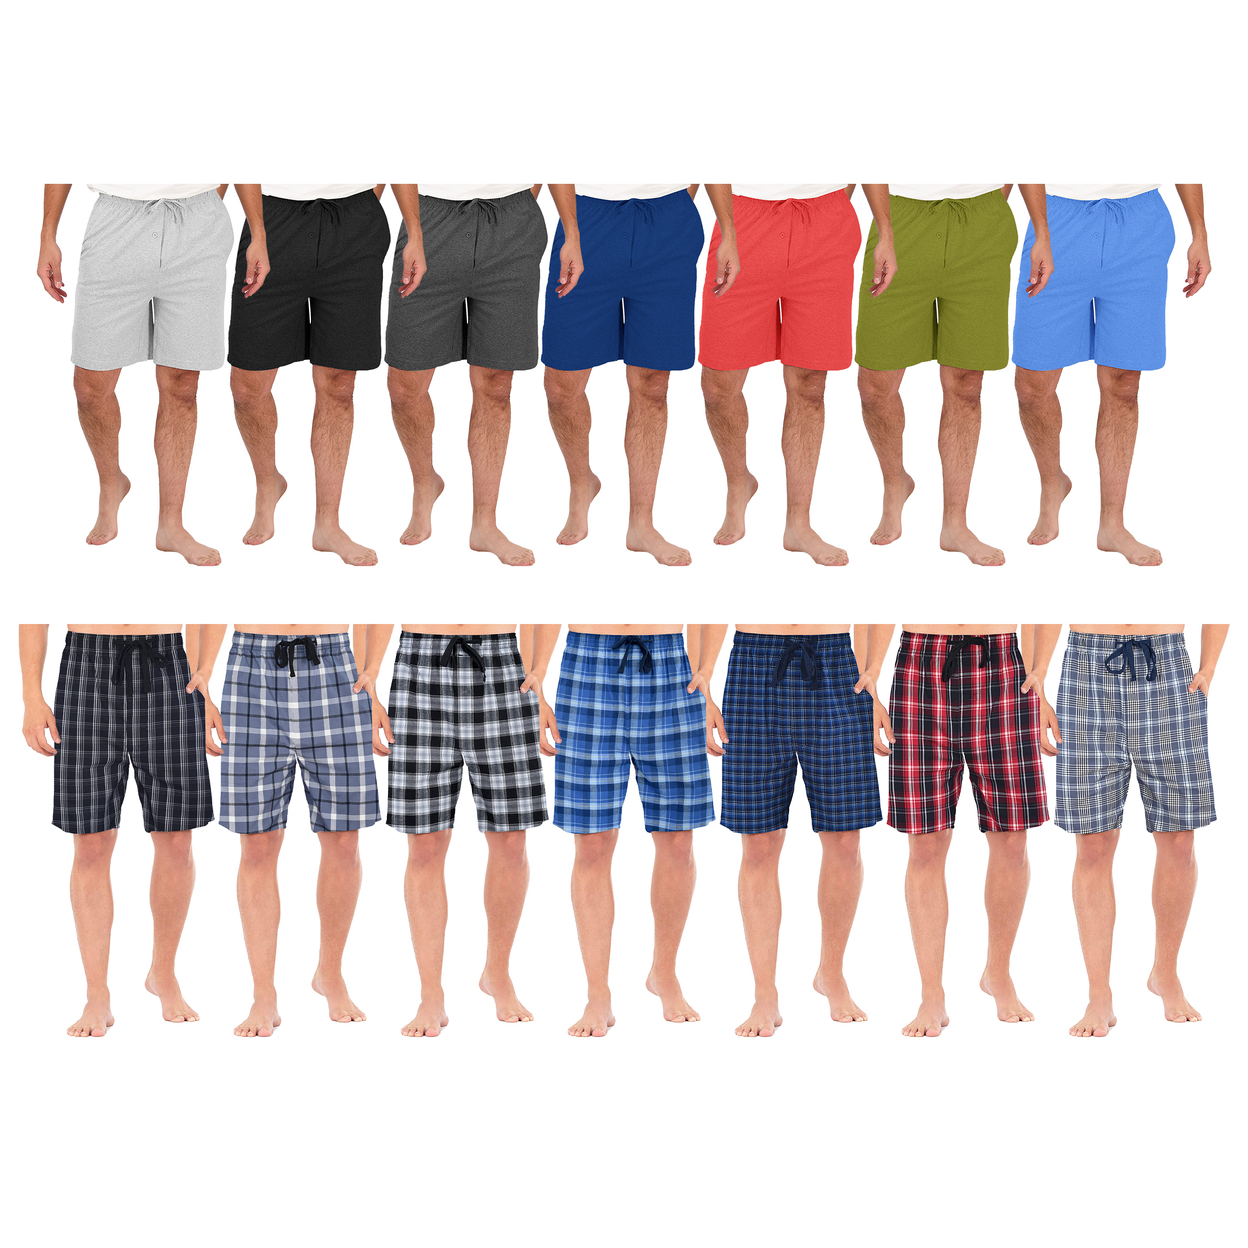 2-Pack: Men's Ultra Soft Knit Lounge Pajama Sleep Shorts - Plaid, Medium